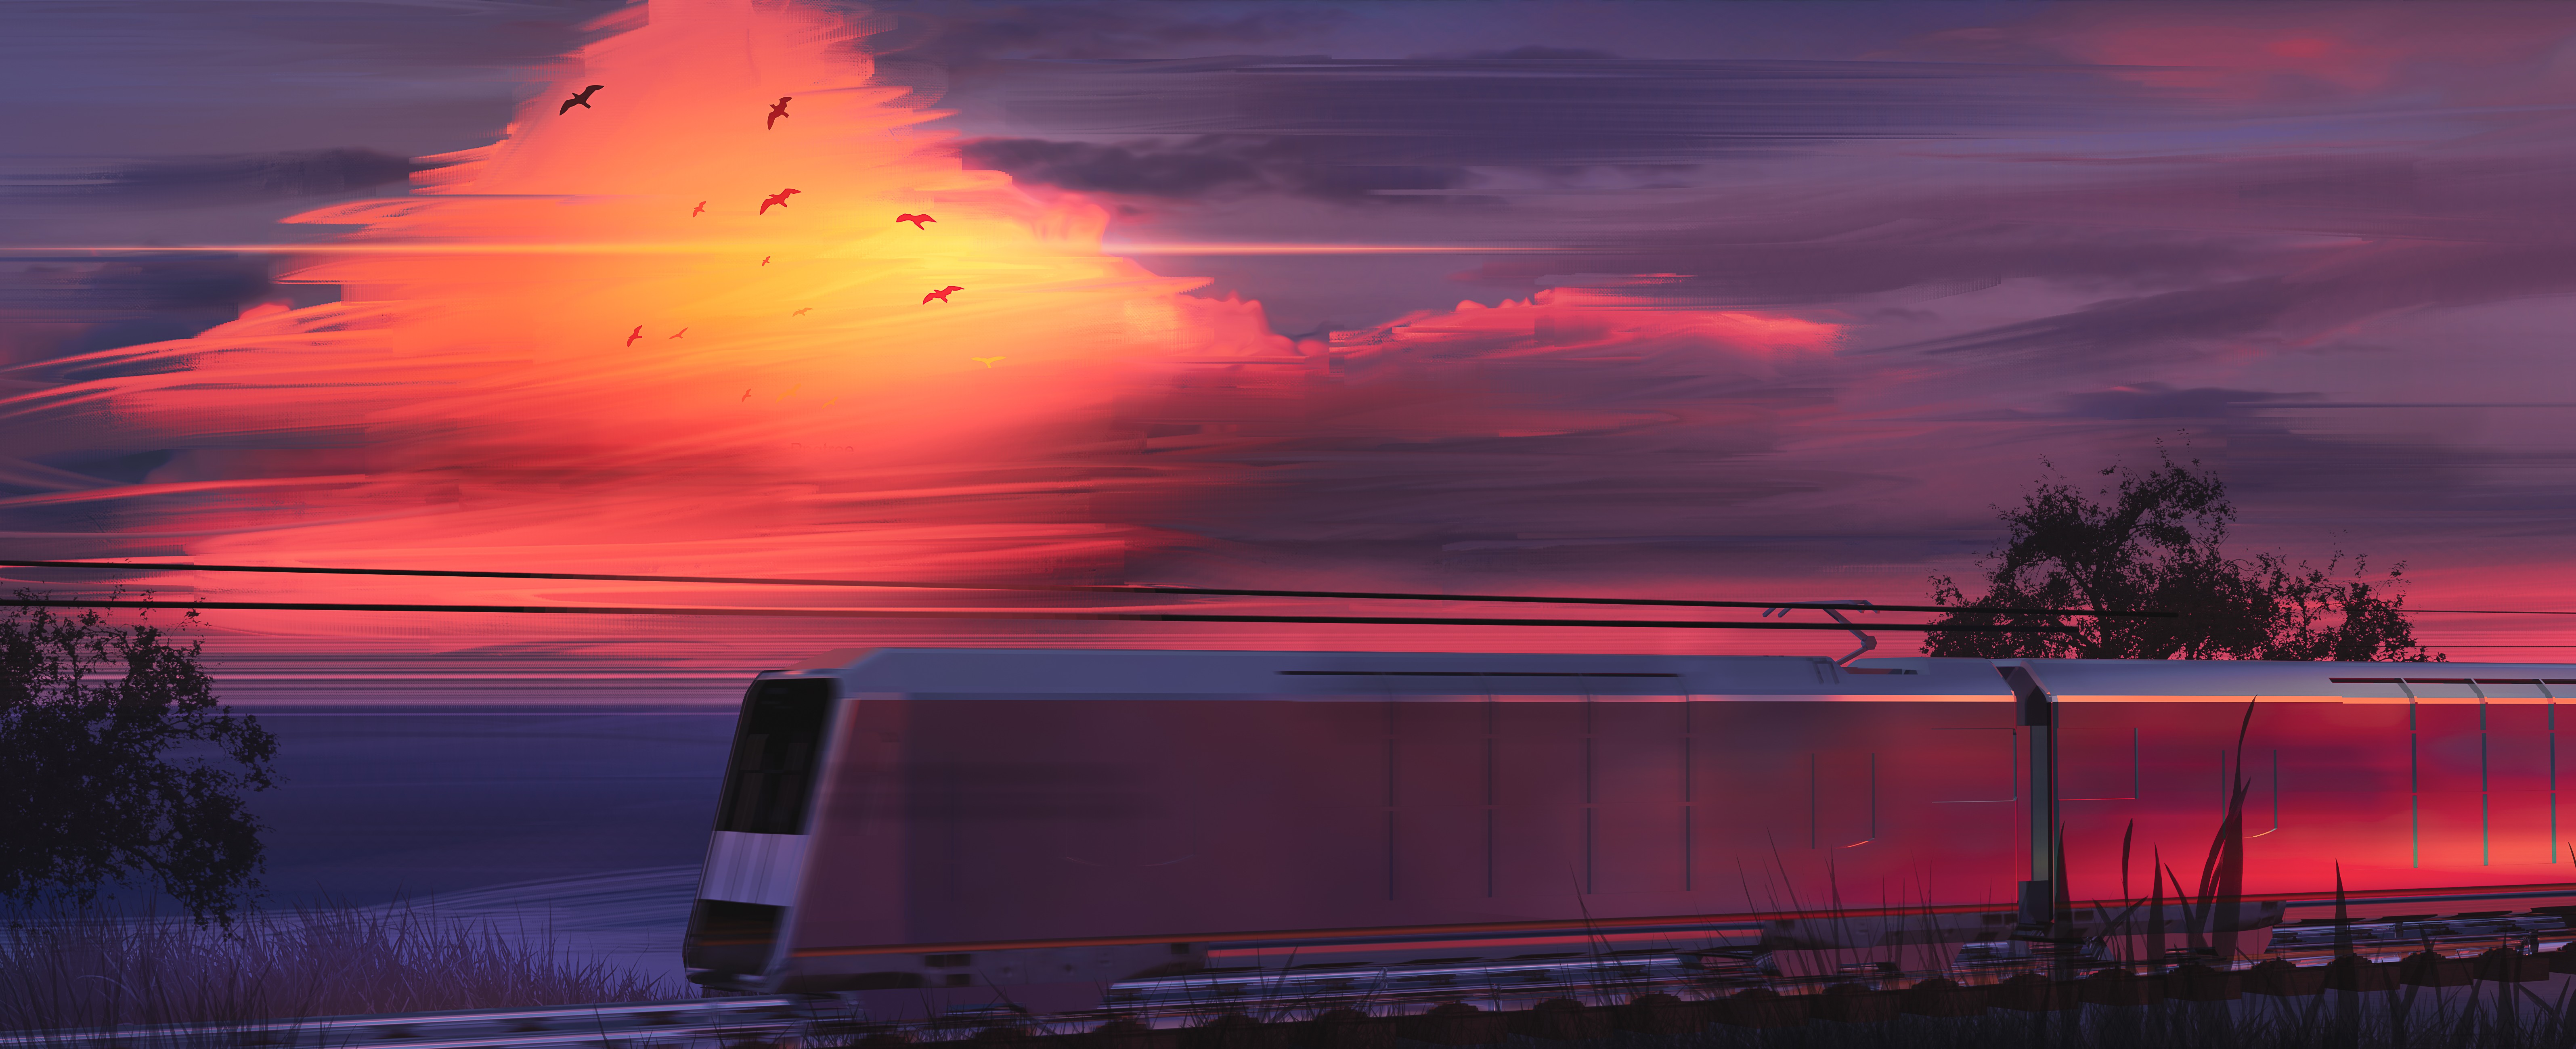 Artistic Train HD Wallpaper | Background Image